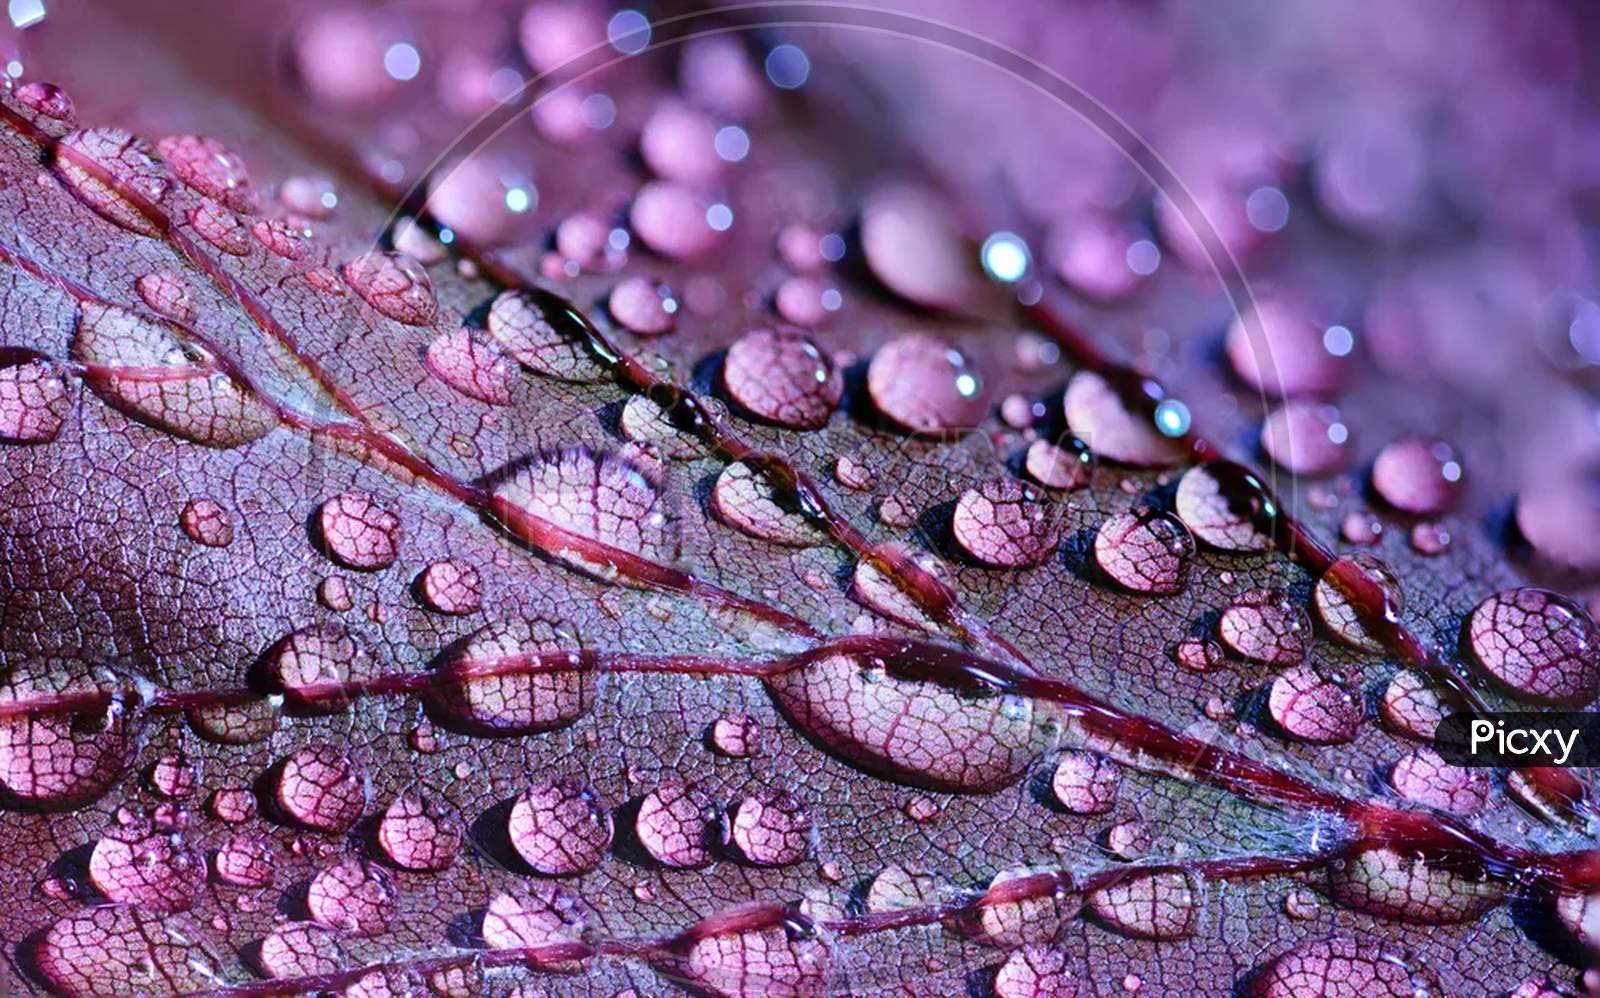 Water Droplets on leaf